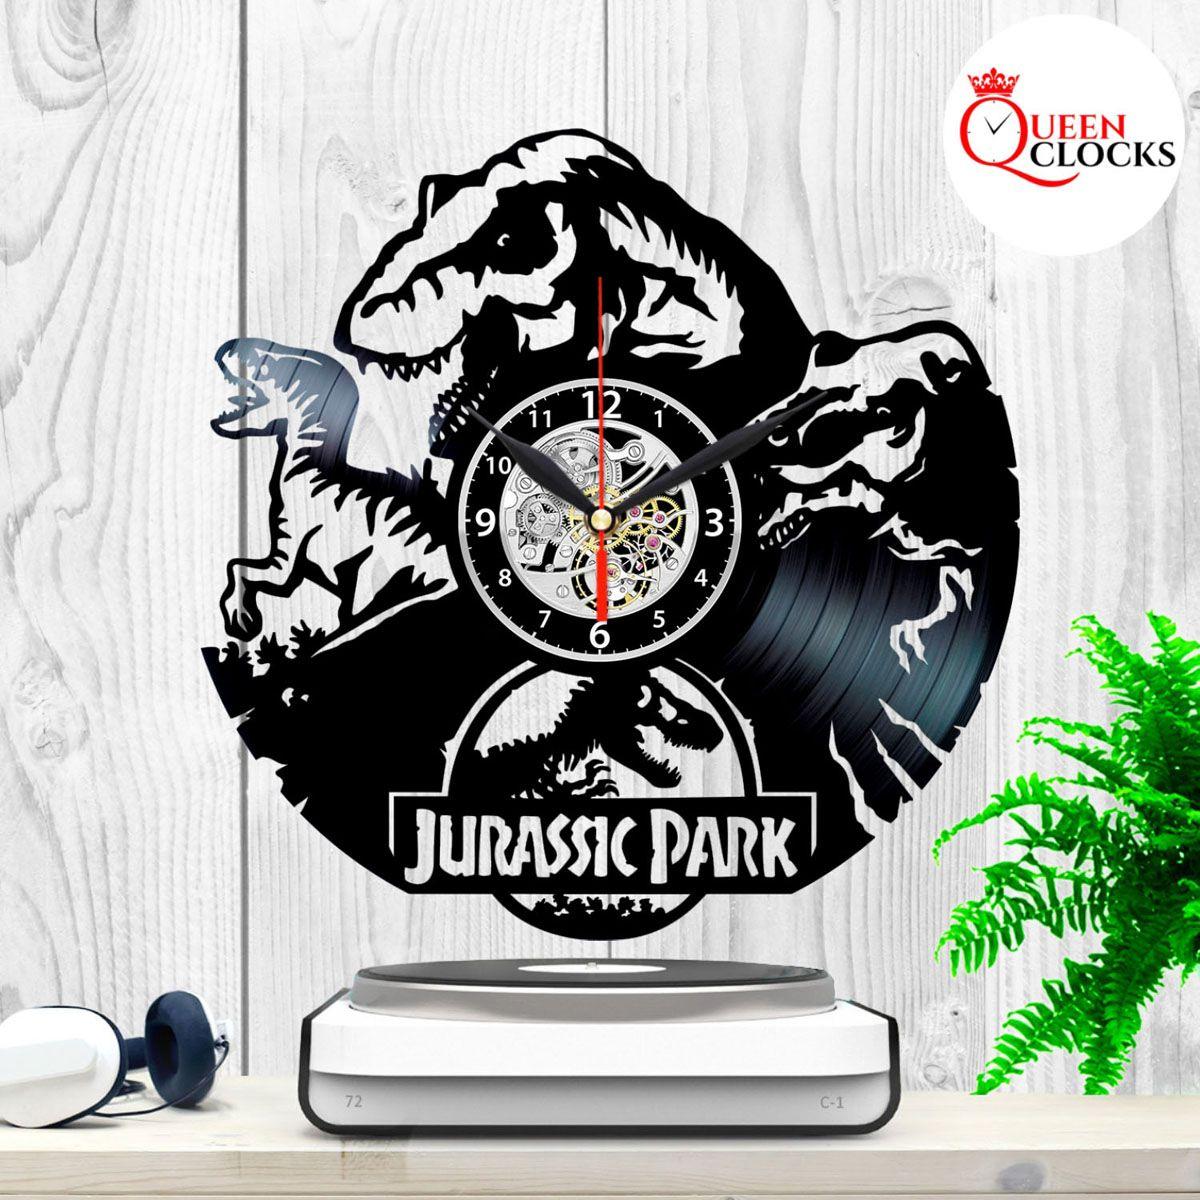 Dinosaurs Logo - Details about Jurassic Park Logo Dinosaurs Vinyl Record Wall Clock Art Home  Decor Kids Gift